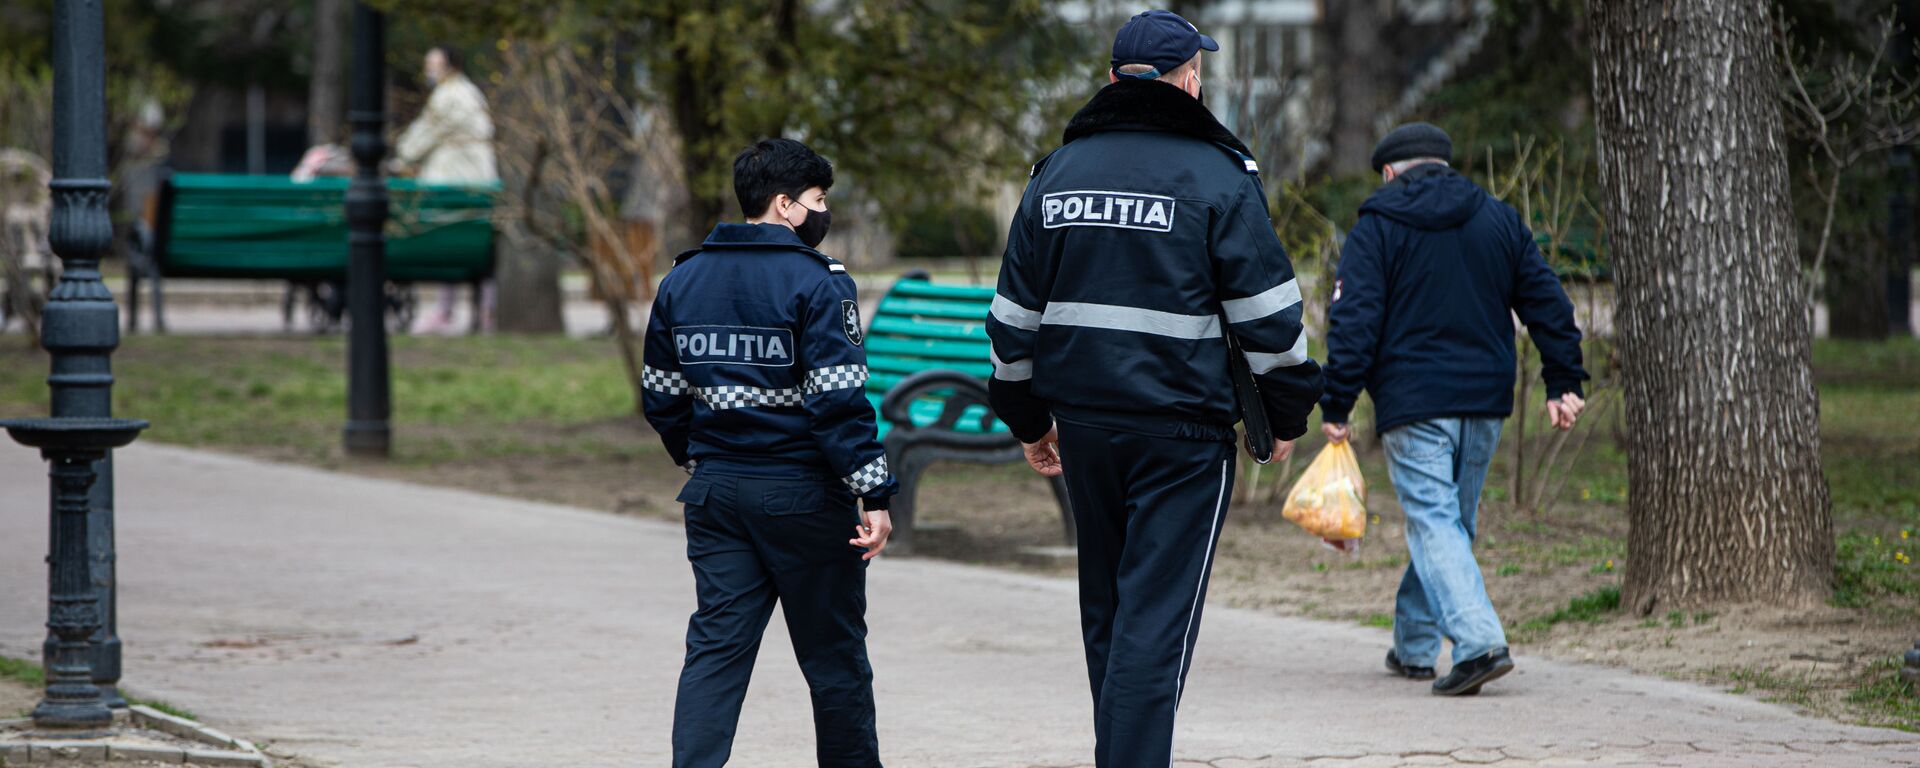 Poliție în parc - Sputnik Moldova, 1920, 29.04.2021